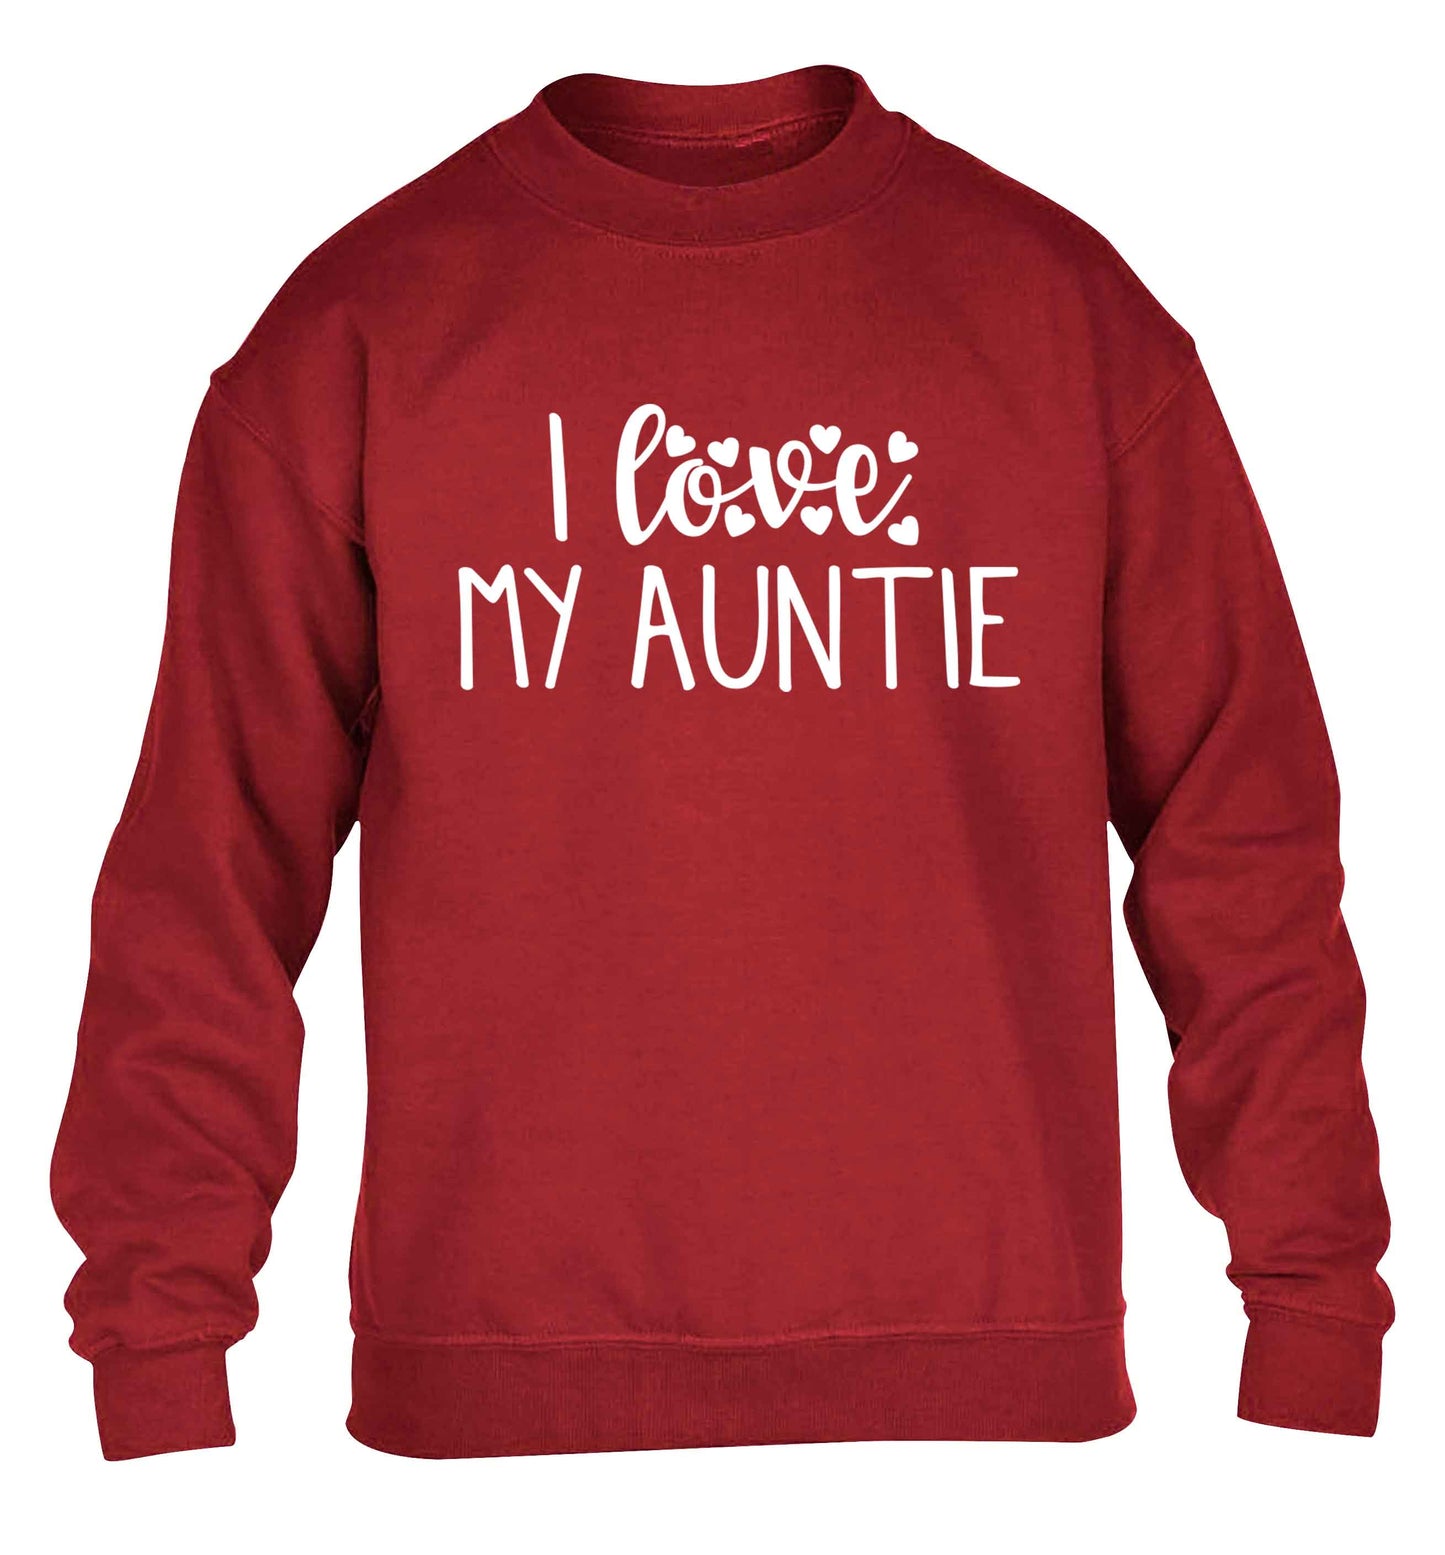 I love my auntie children's grey sweater 12-13 Years